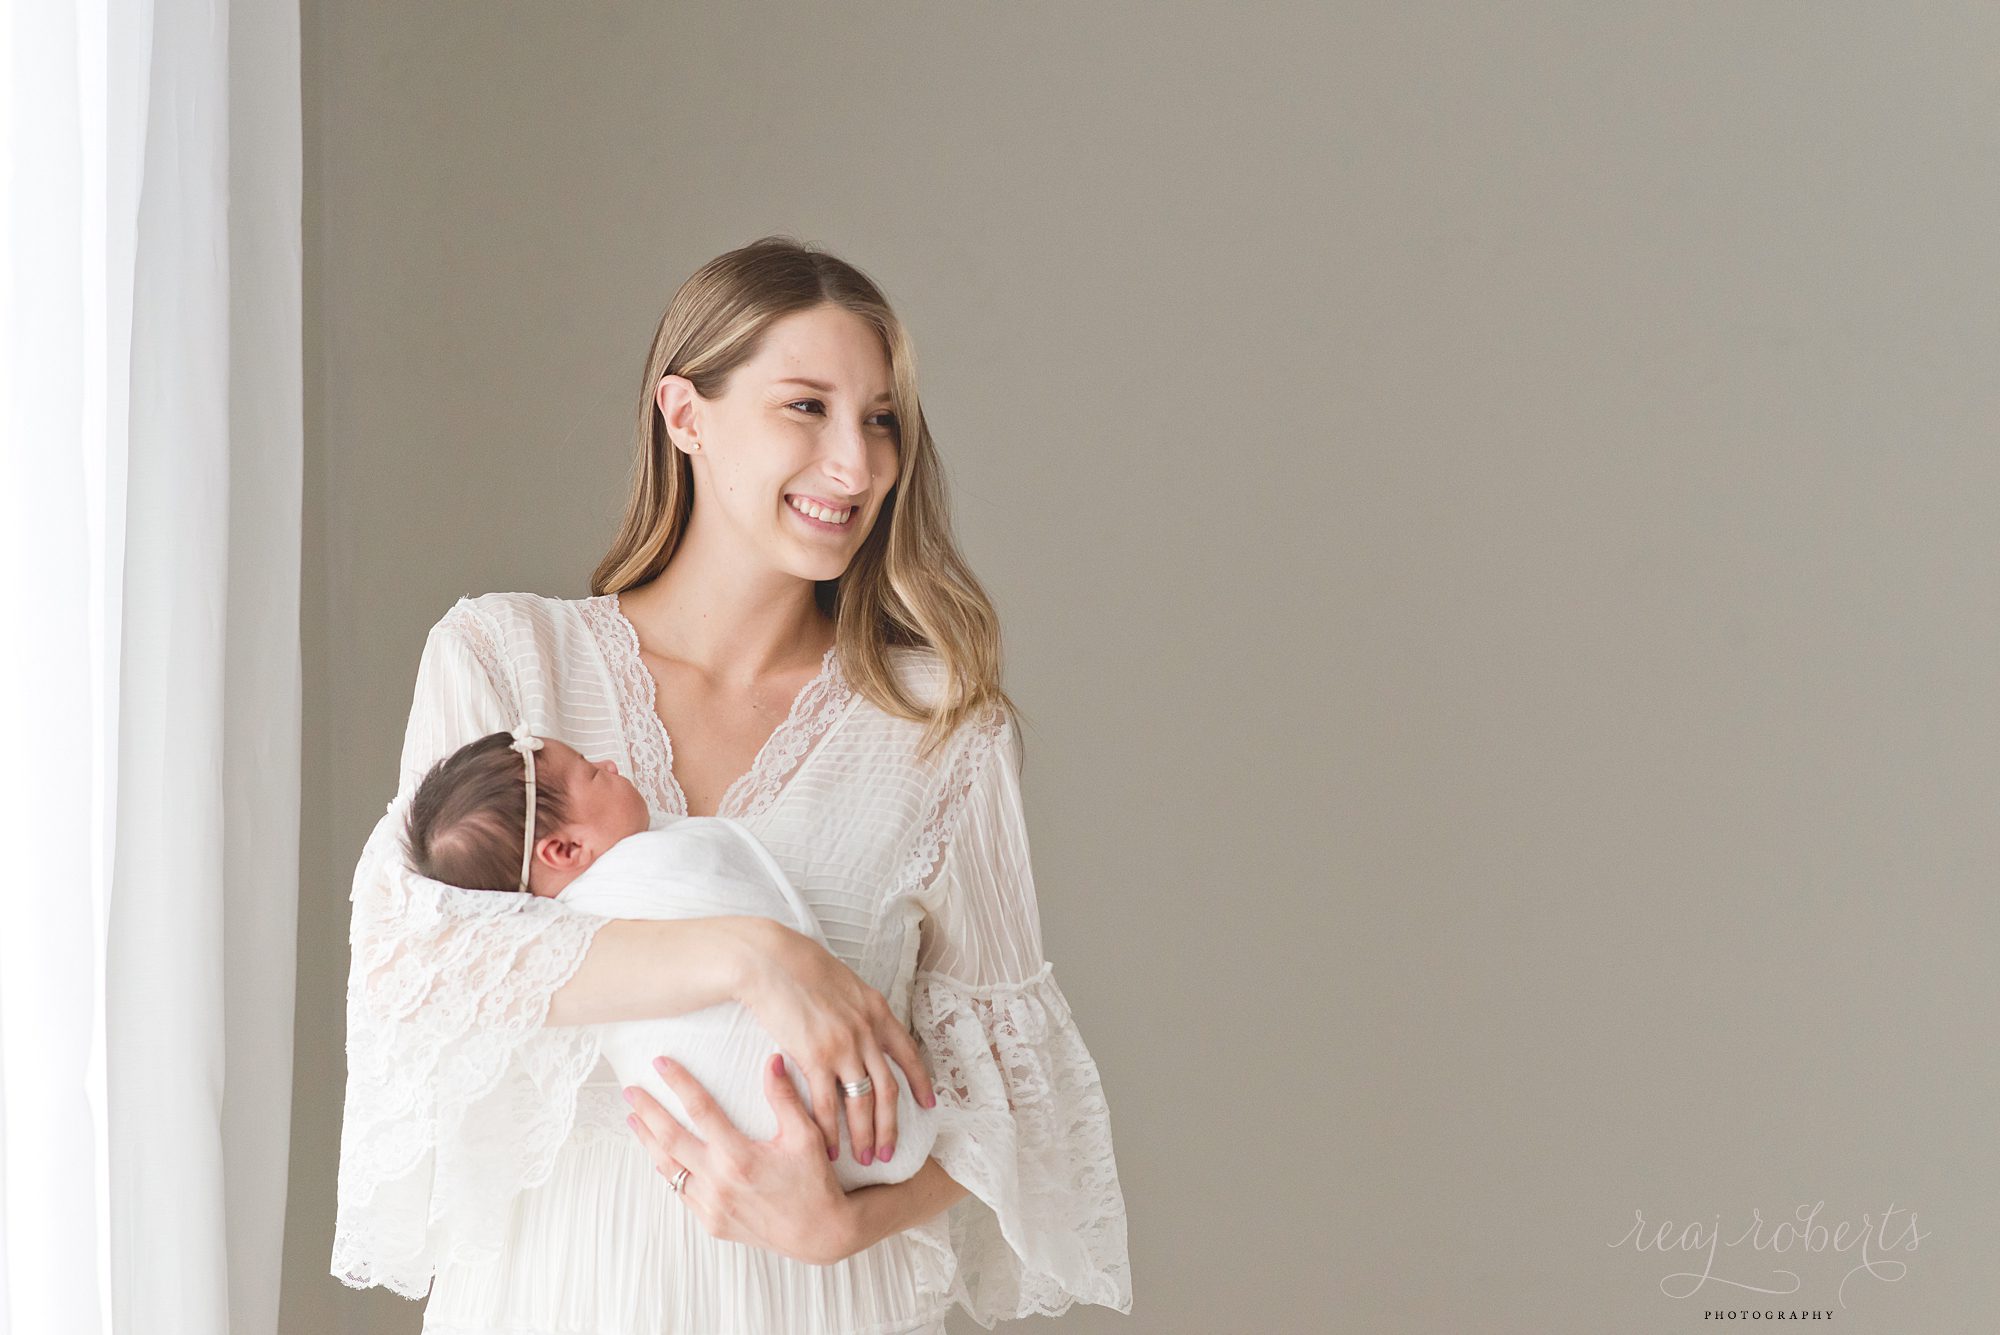 Phoenix Baby Photographer | Reaj Roberts Photography | proud happy mother smiling holding newborn